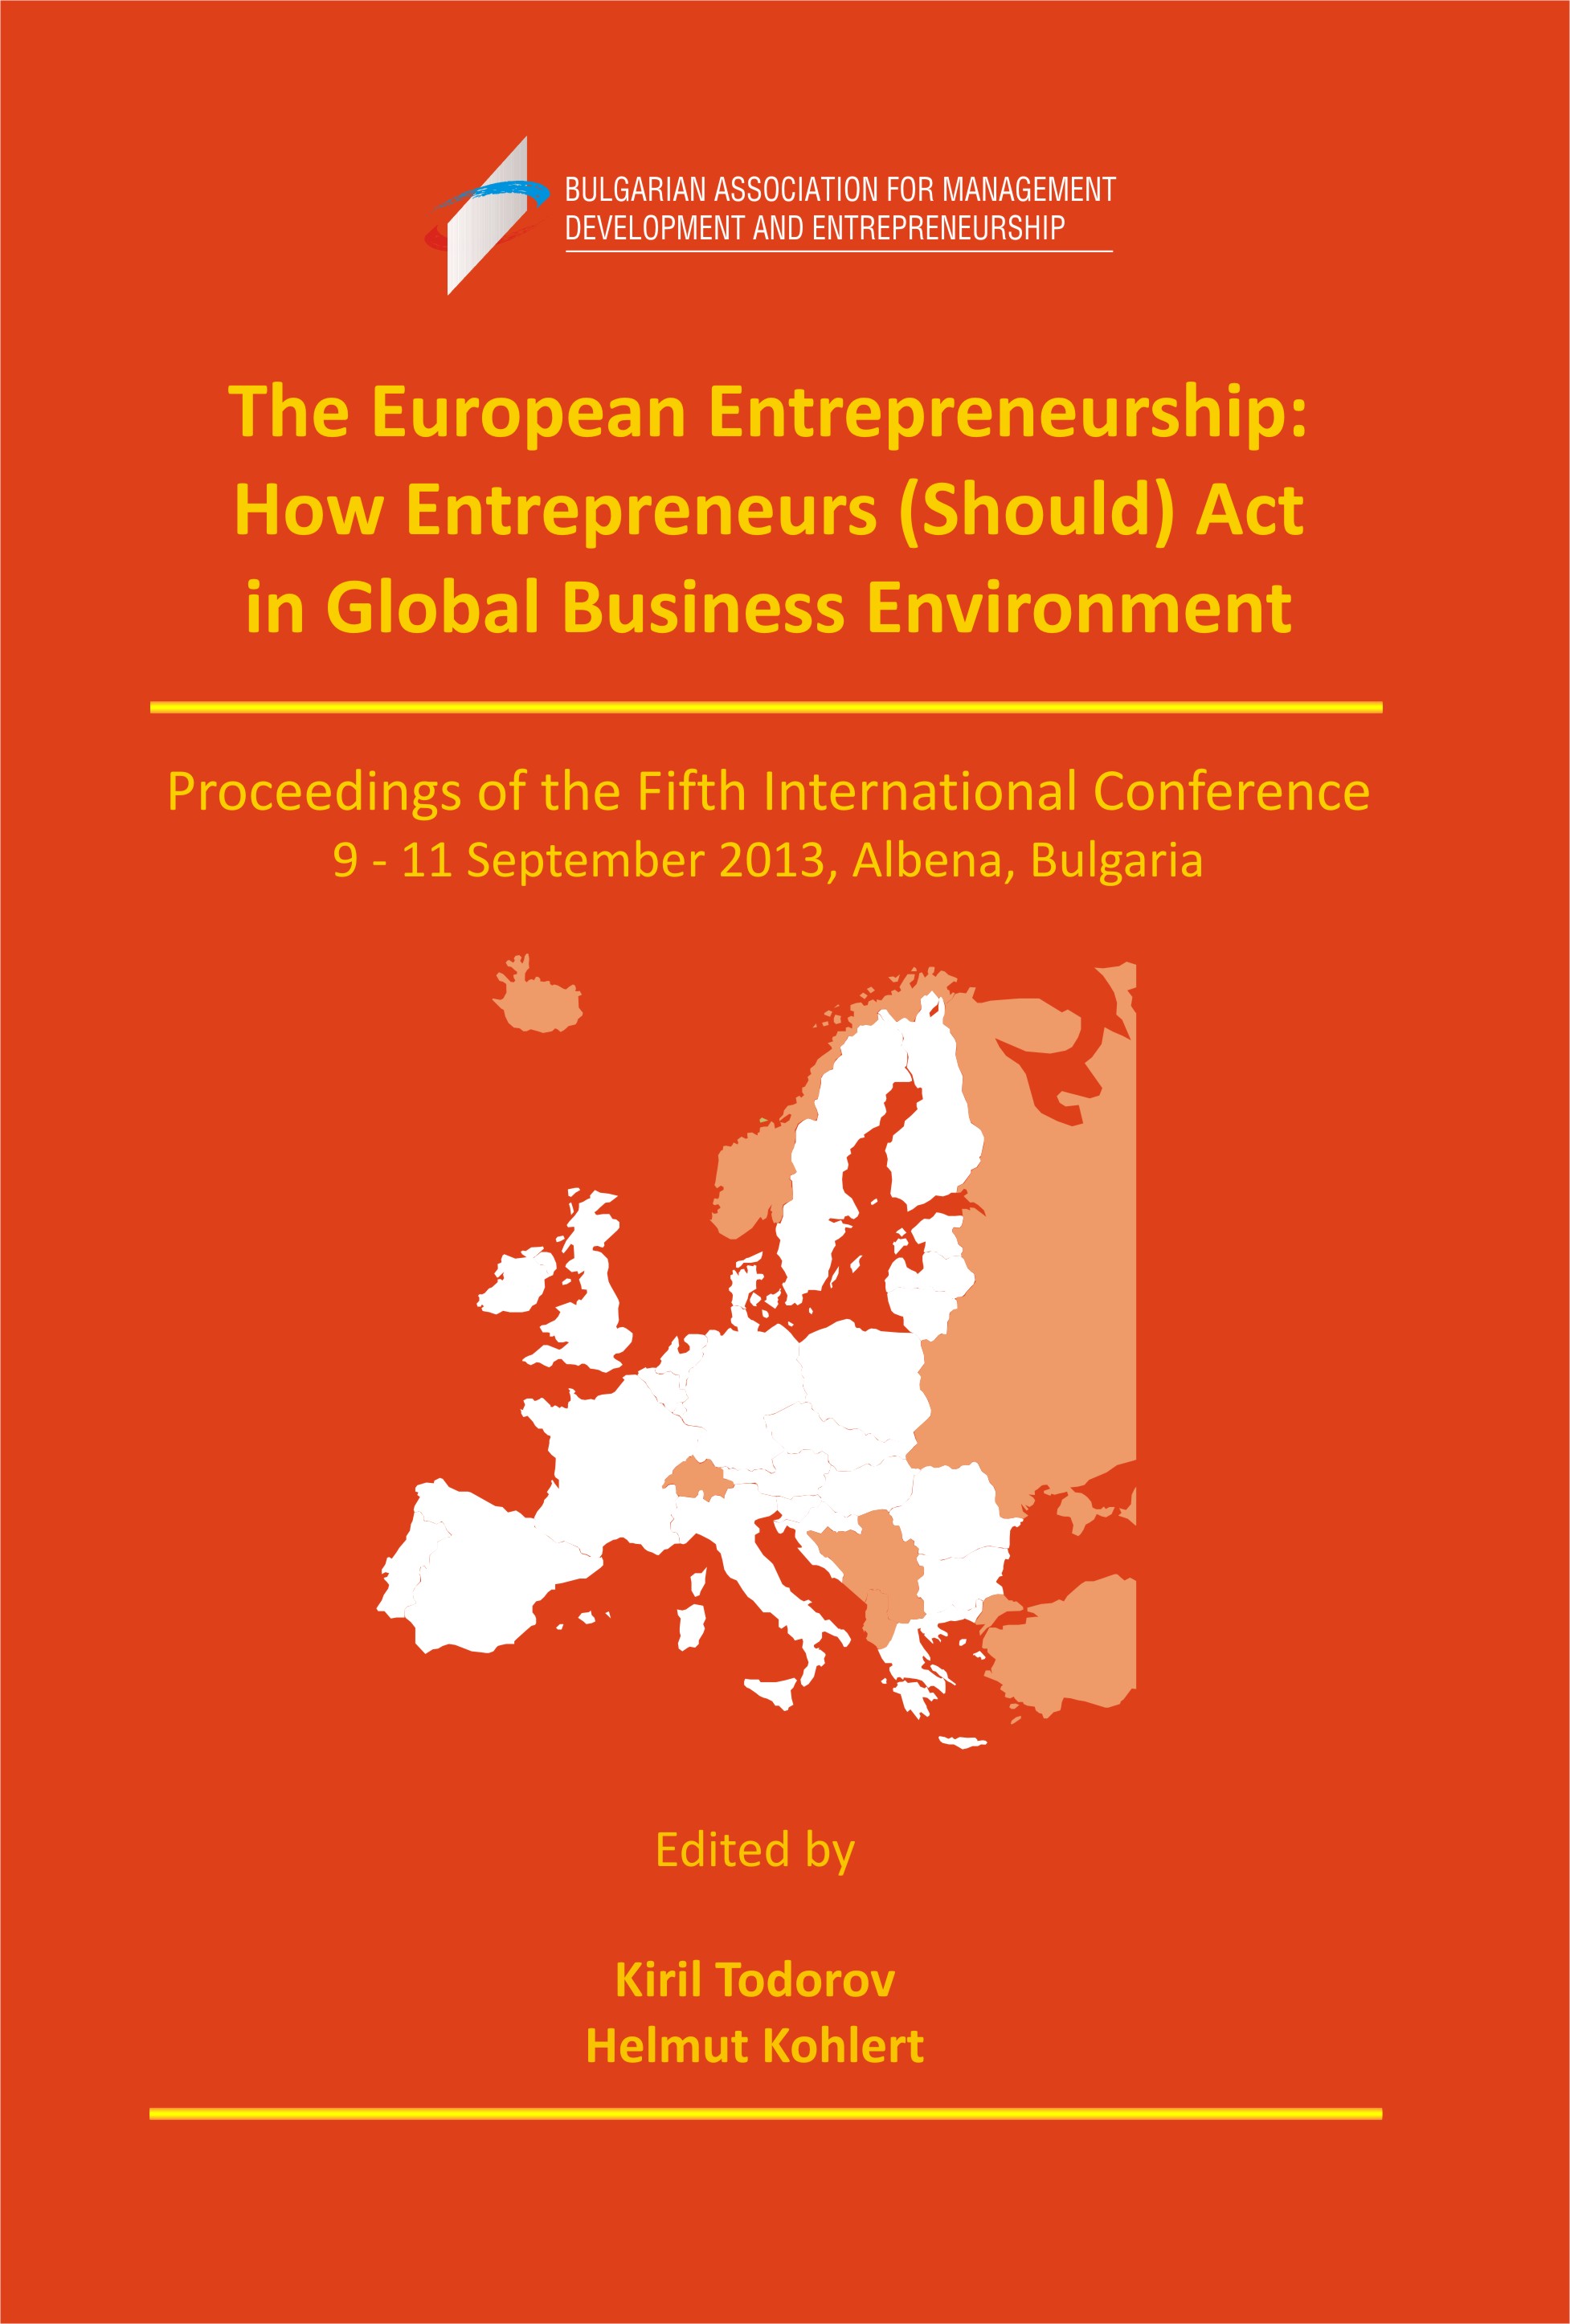 entrepreneurship_5fef7_Cover Proceedings Albena 2013.jpg